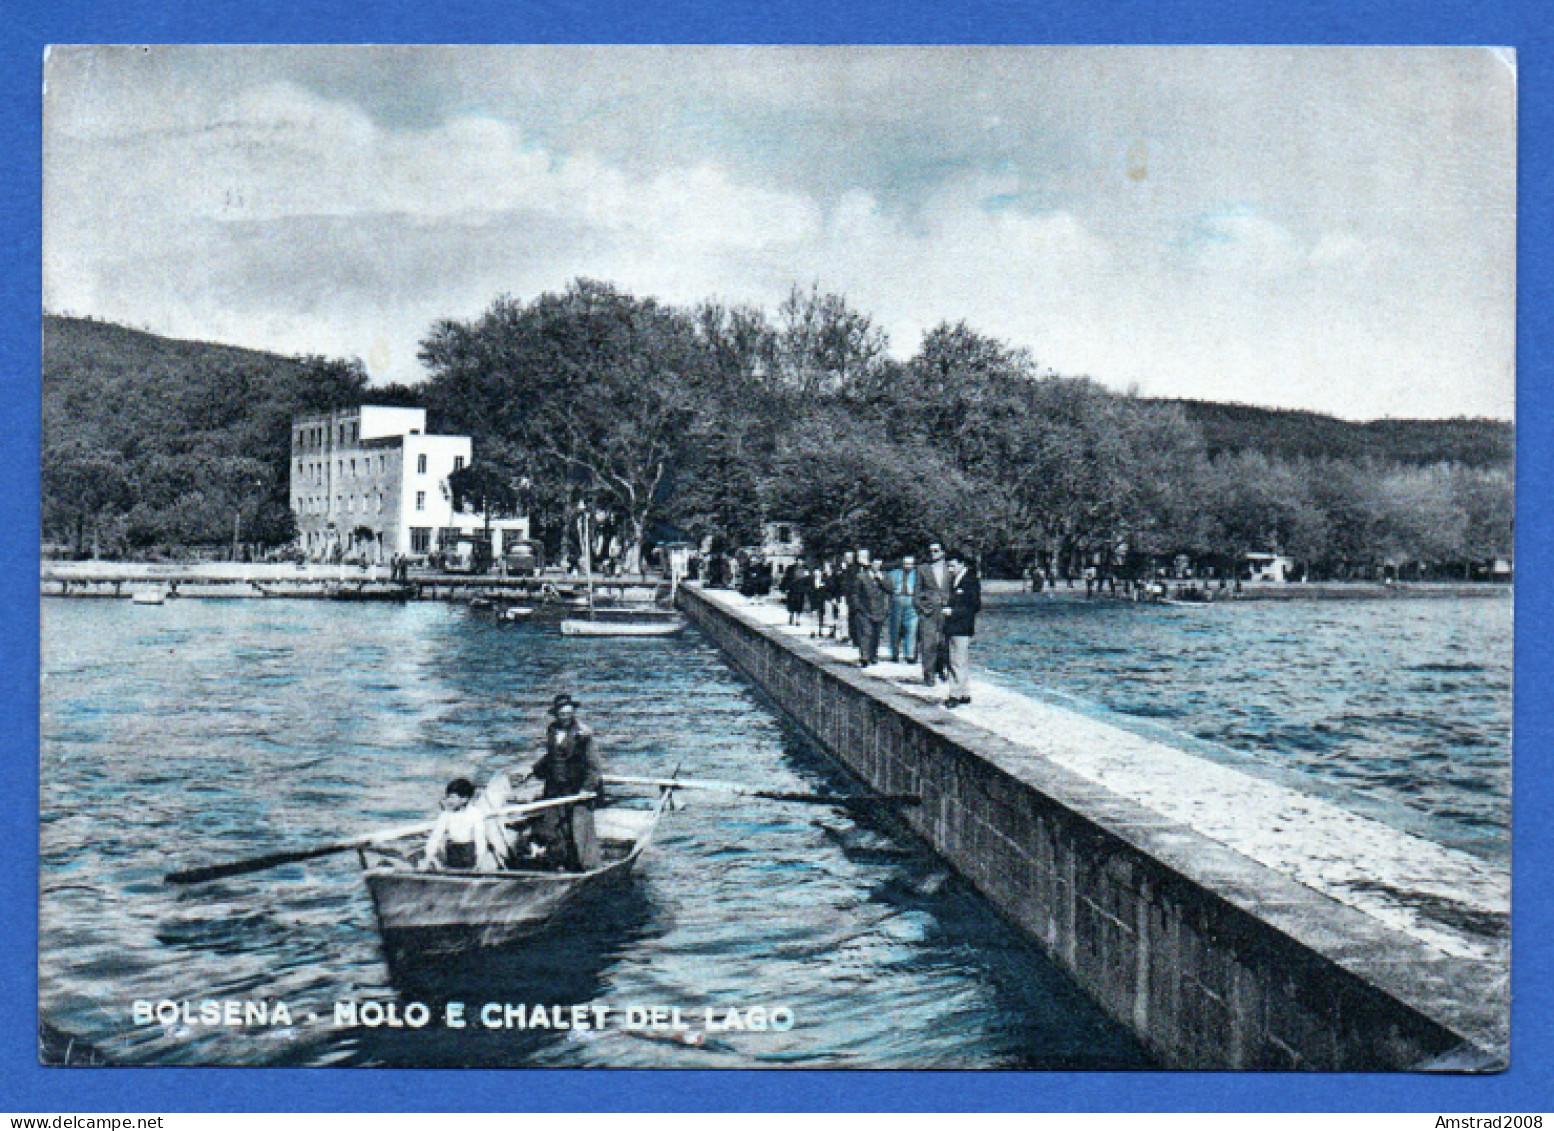 1954 - BOLSENA - MOLO E CHALET DEL LAGO  -  ITALIE - Viterbo